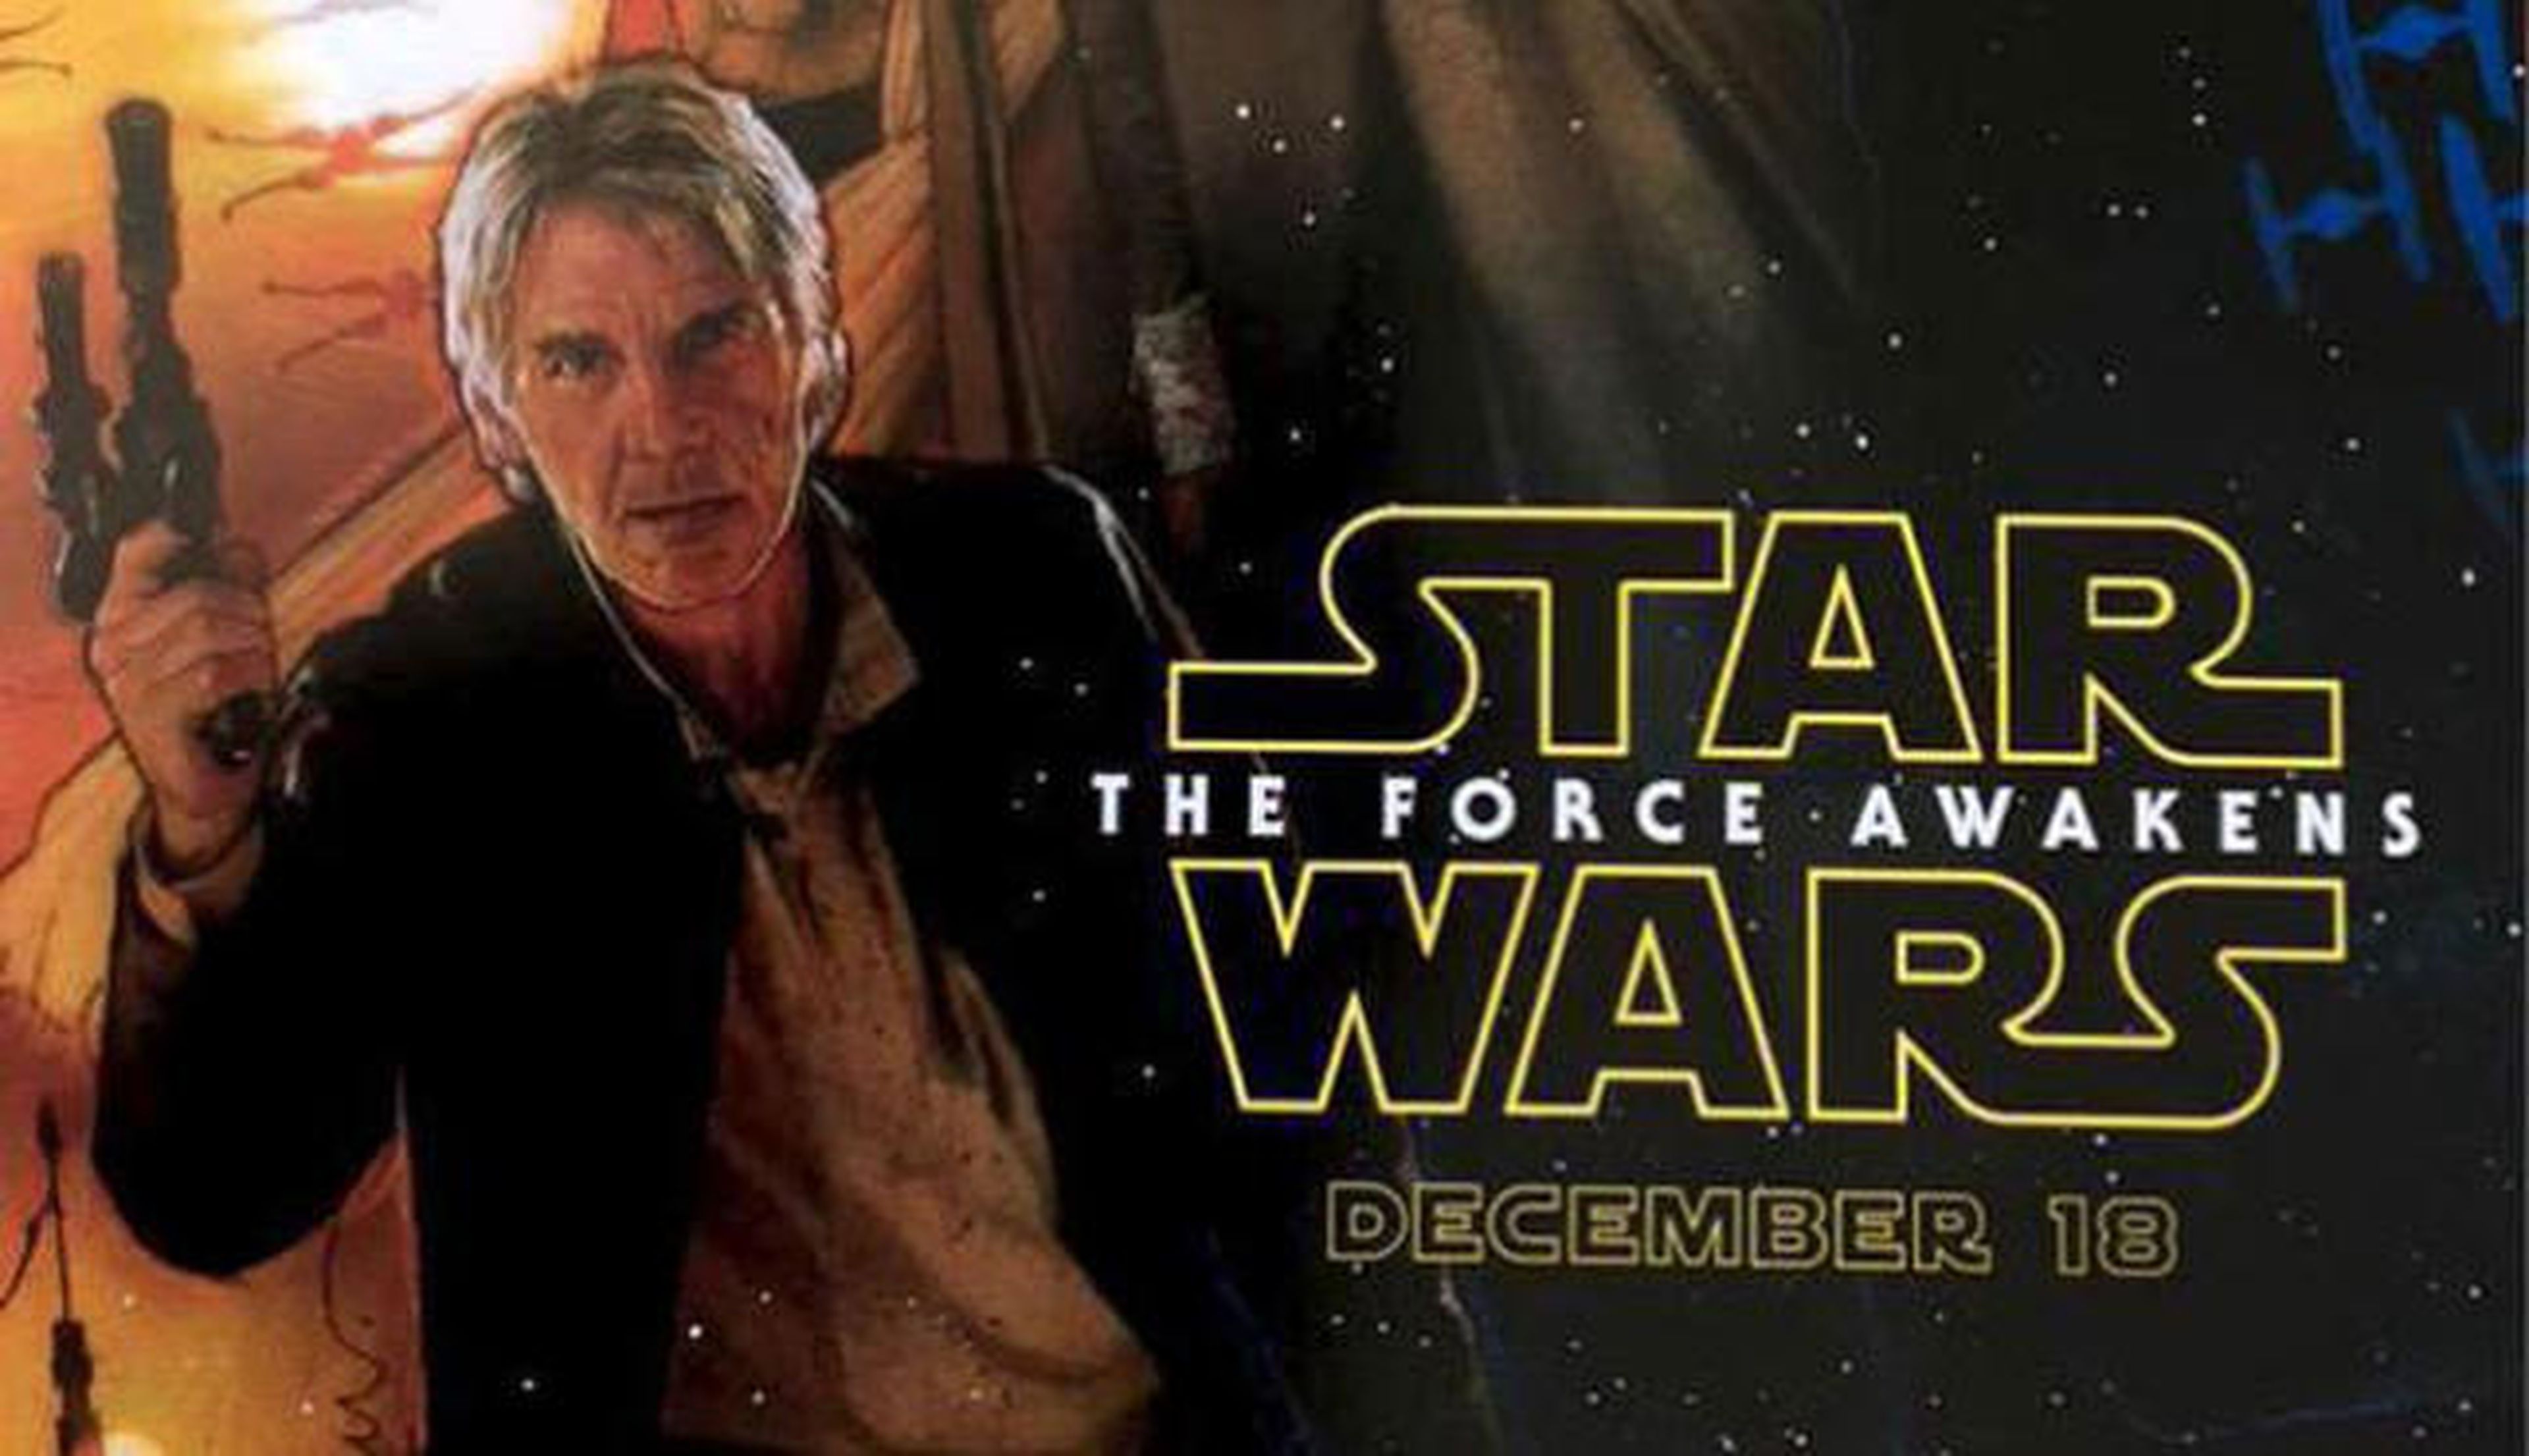 Detalles ocultos en el póster de Star Wars El despertar de la Fuerza